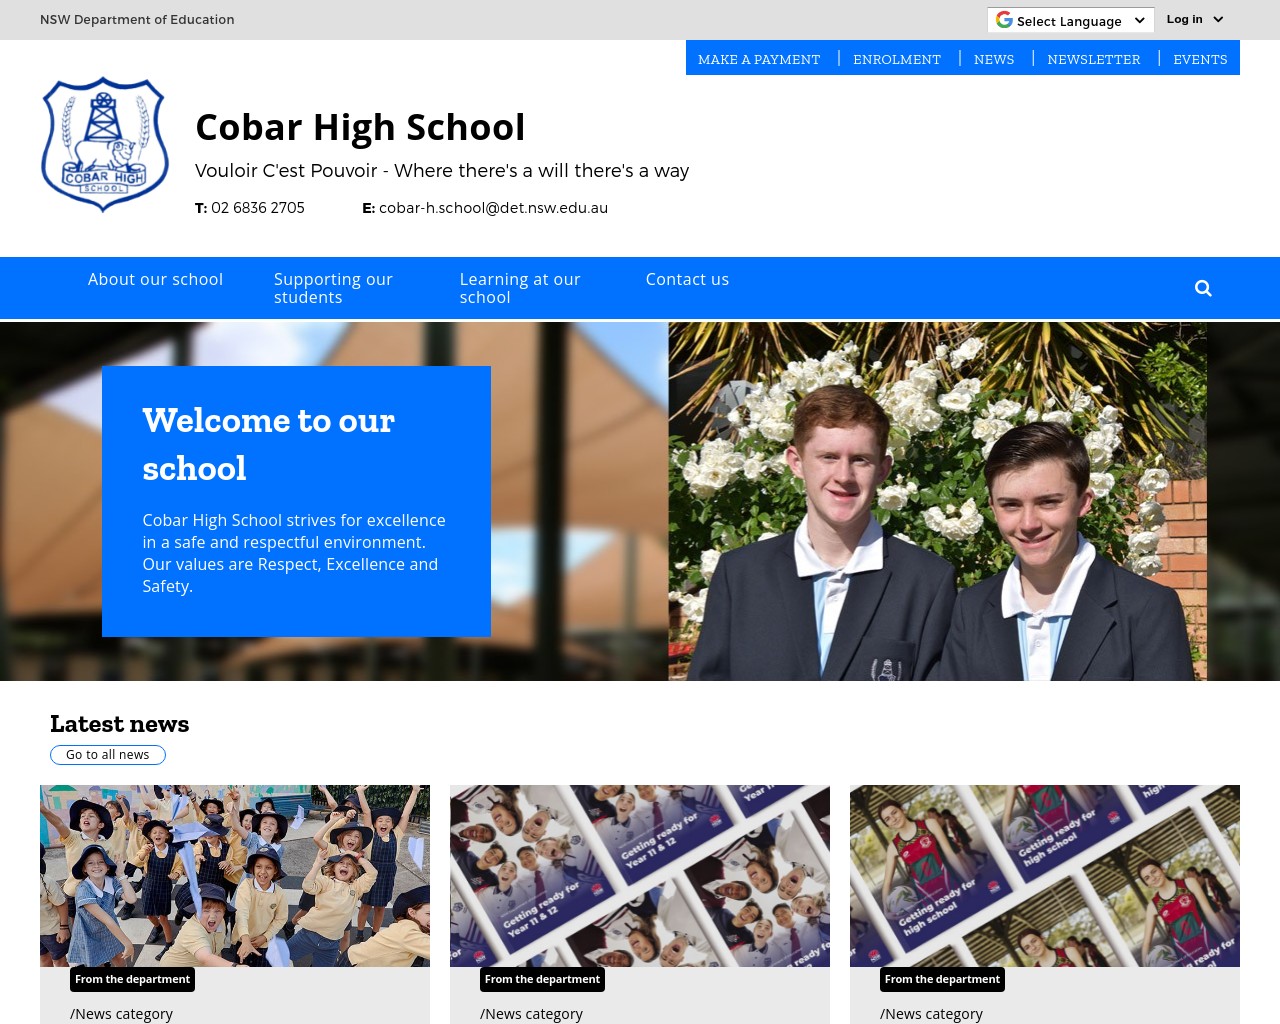 Cobar High School